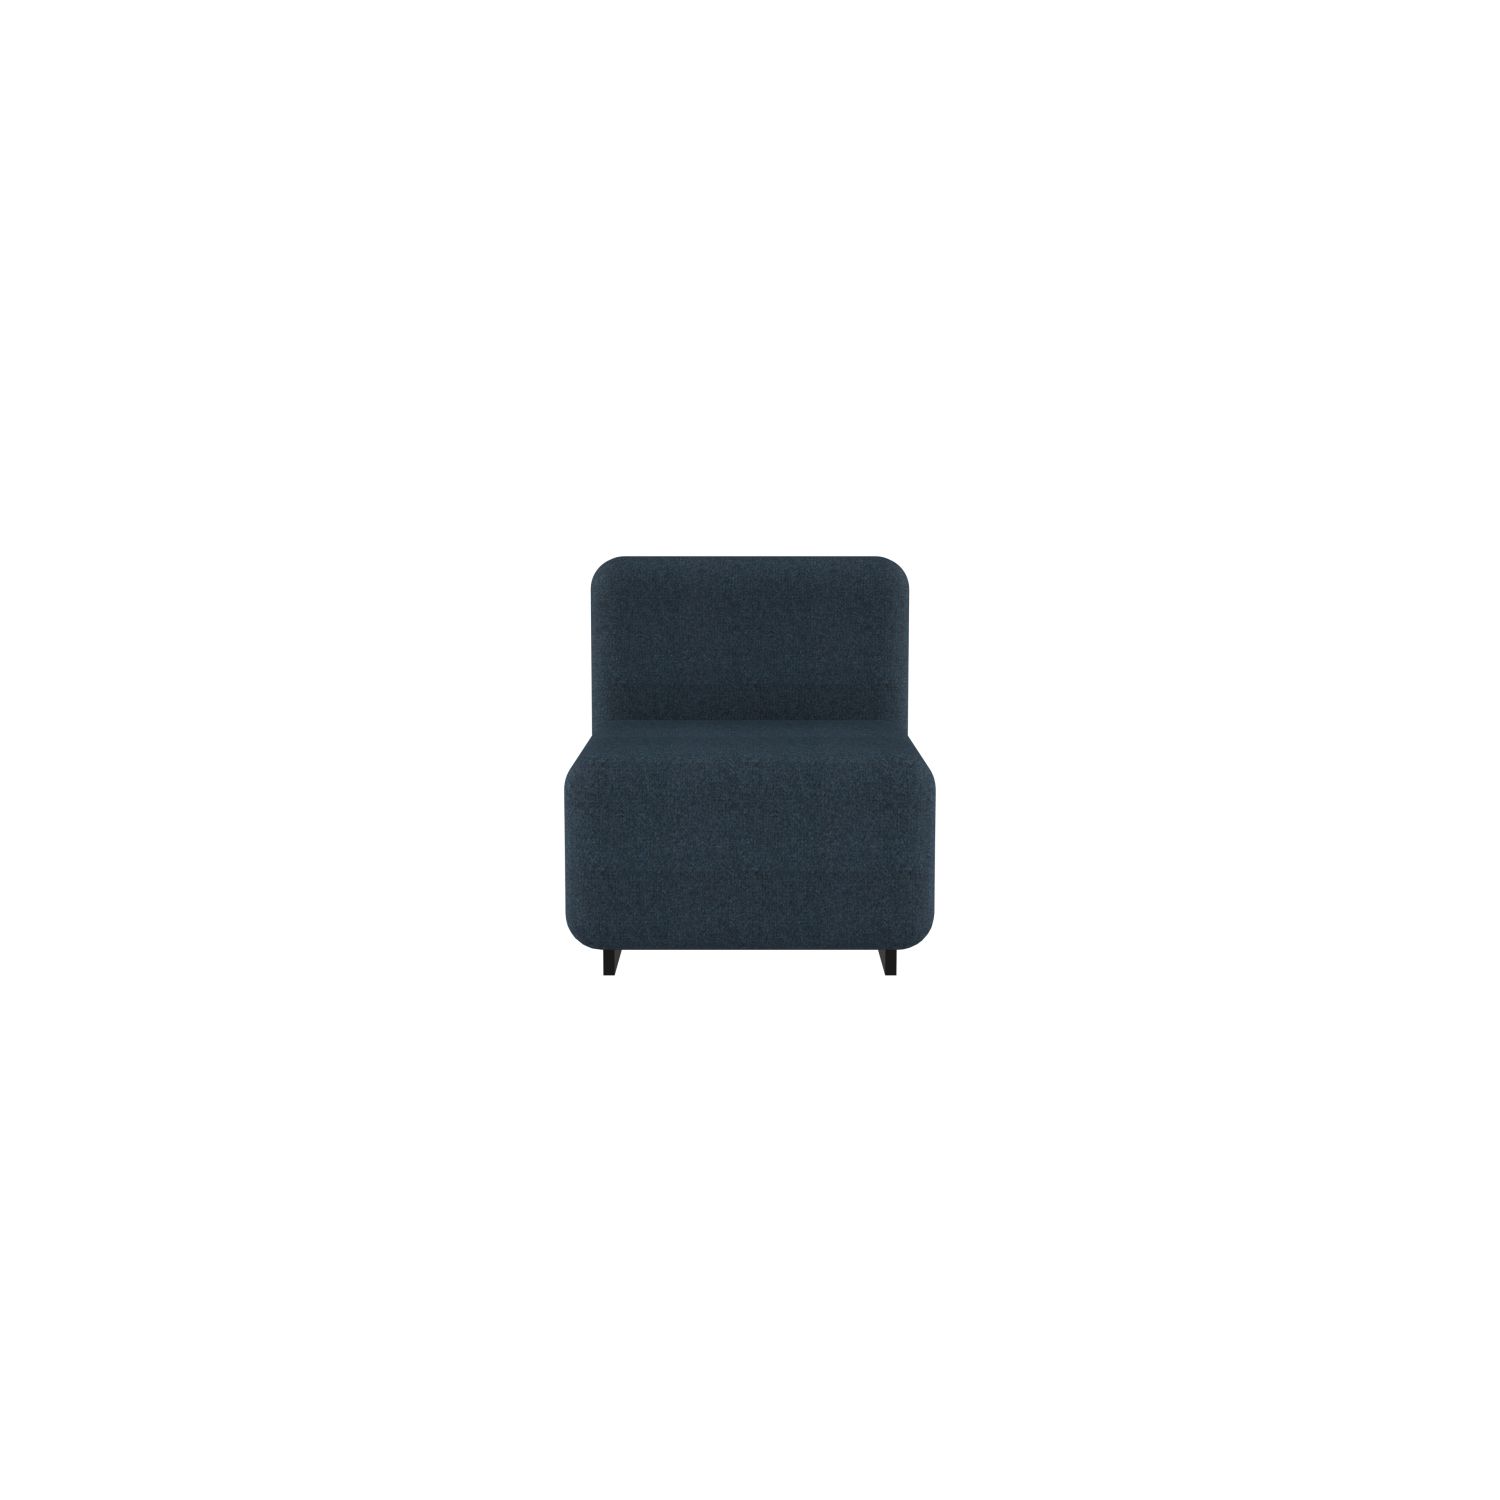 lensvelt fabio novembre balance armchair without armrest moss night blue 45 black ral9005